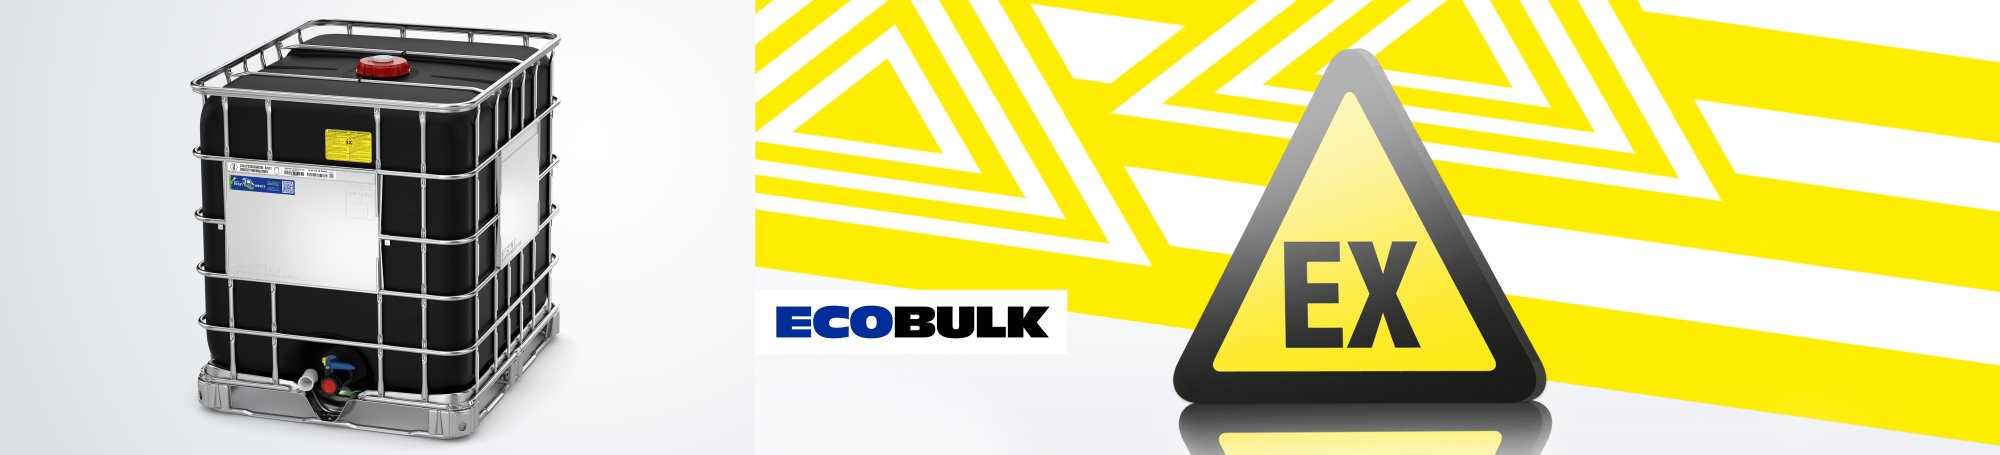 ECOBULK MX-EX leitfähig